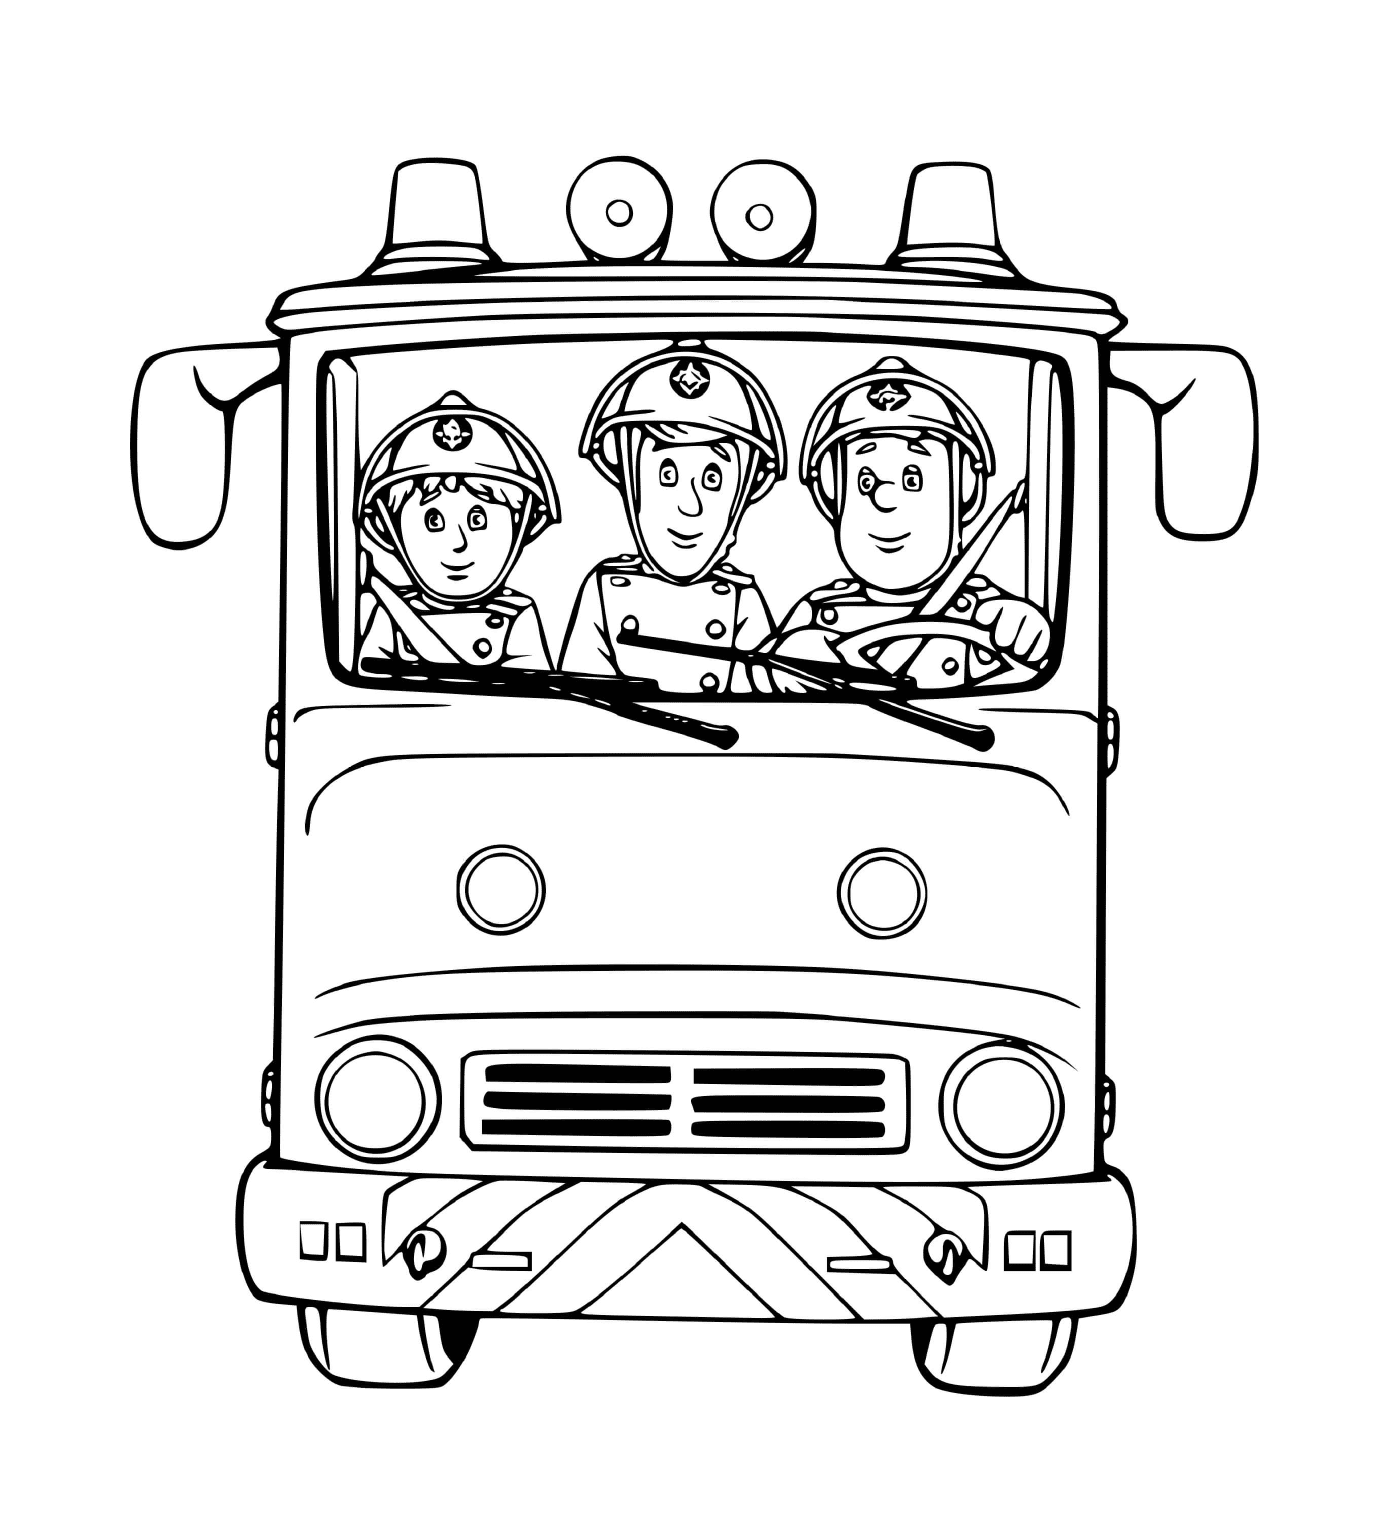  Tres bomberos en un camión listos para actuar 